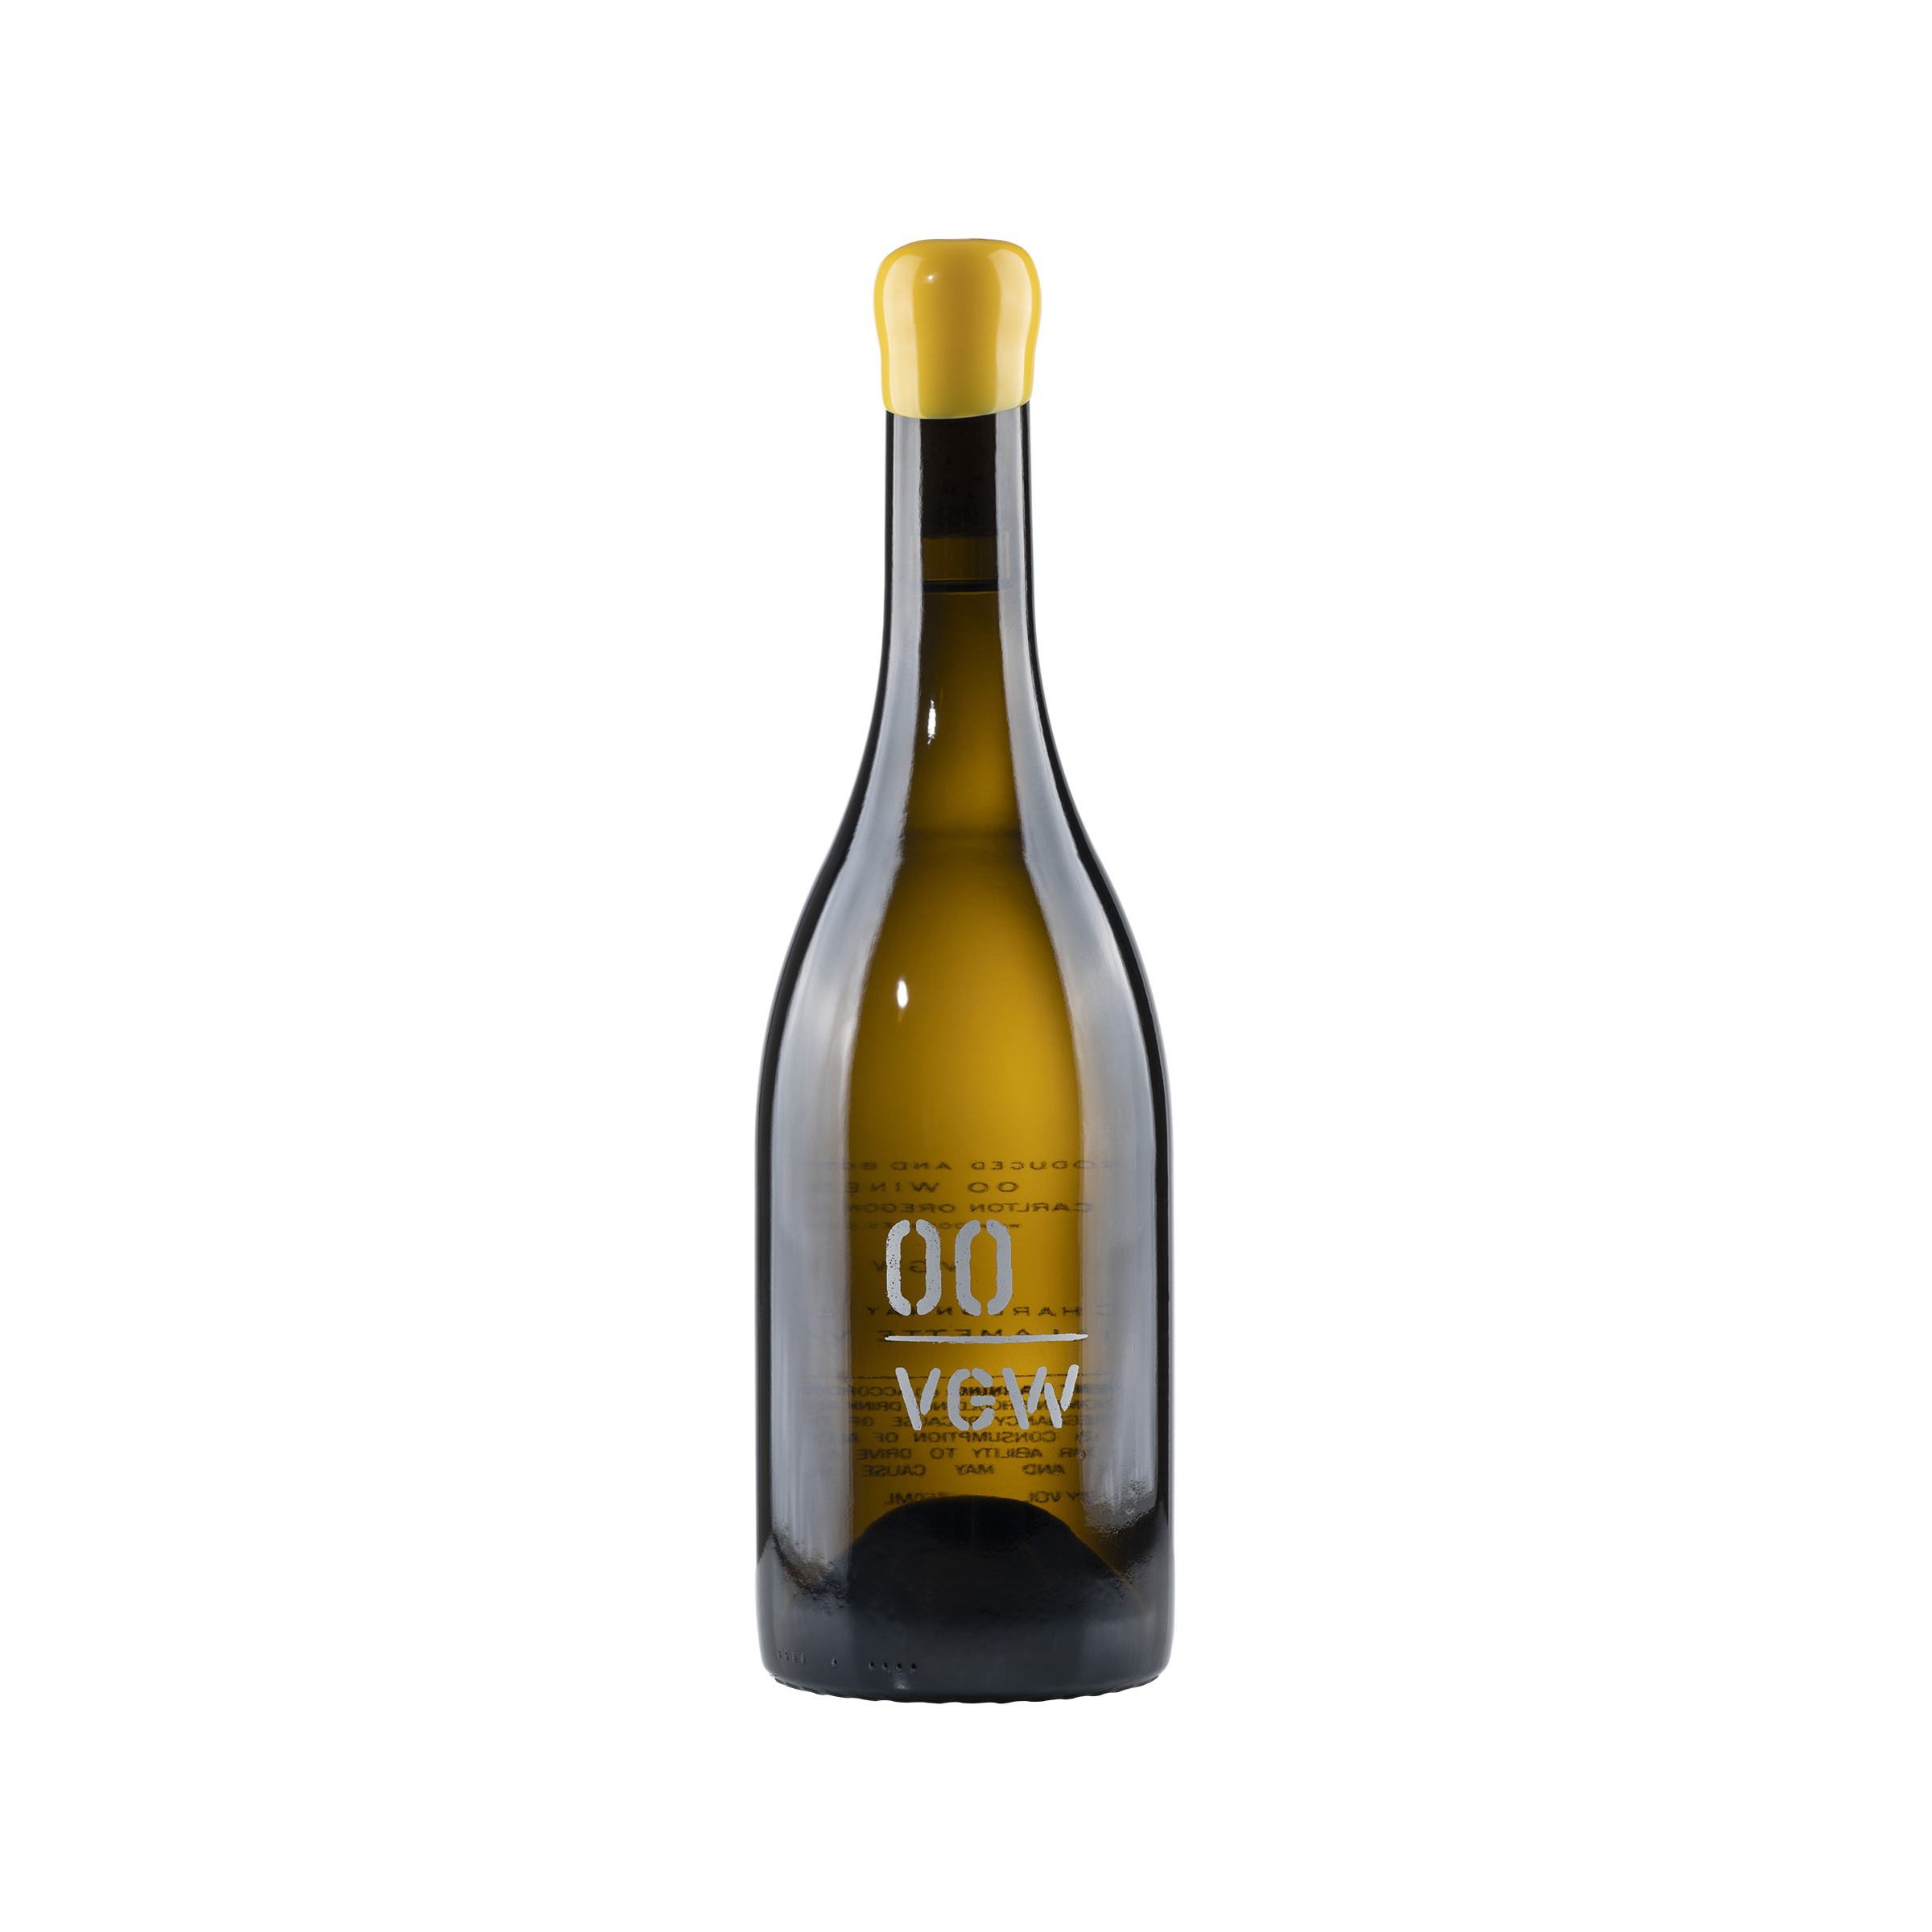 VGW Chardonnay 2019 Bottle Front